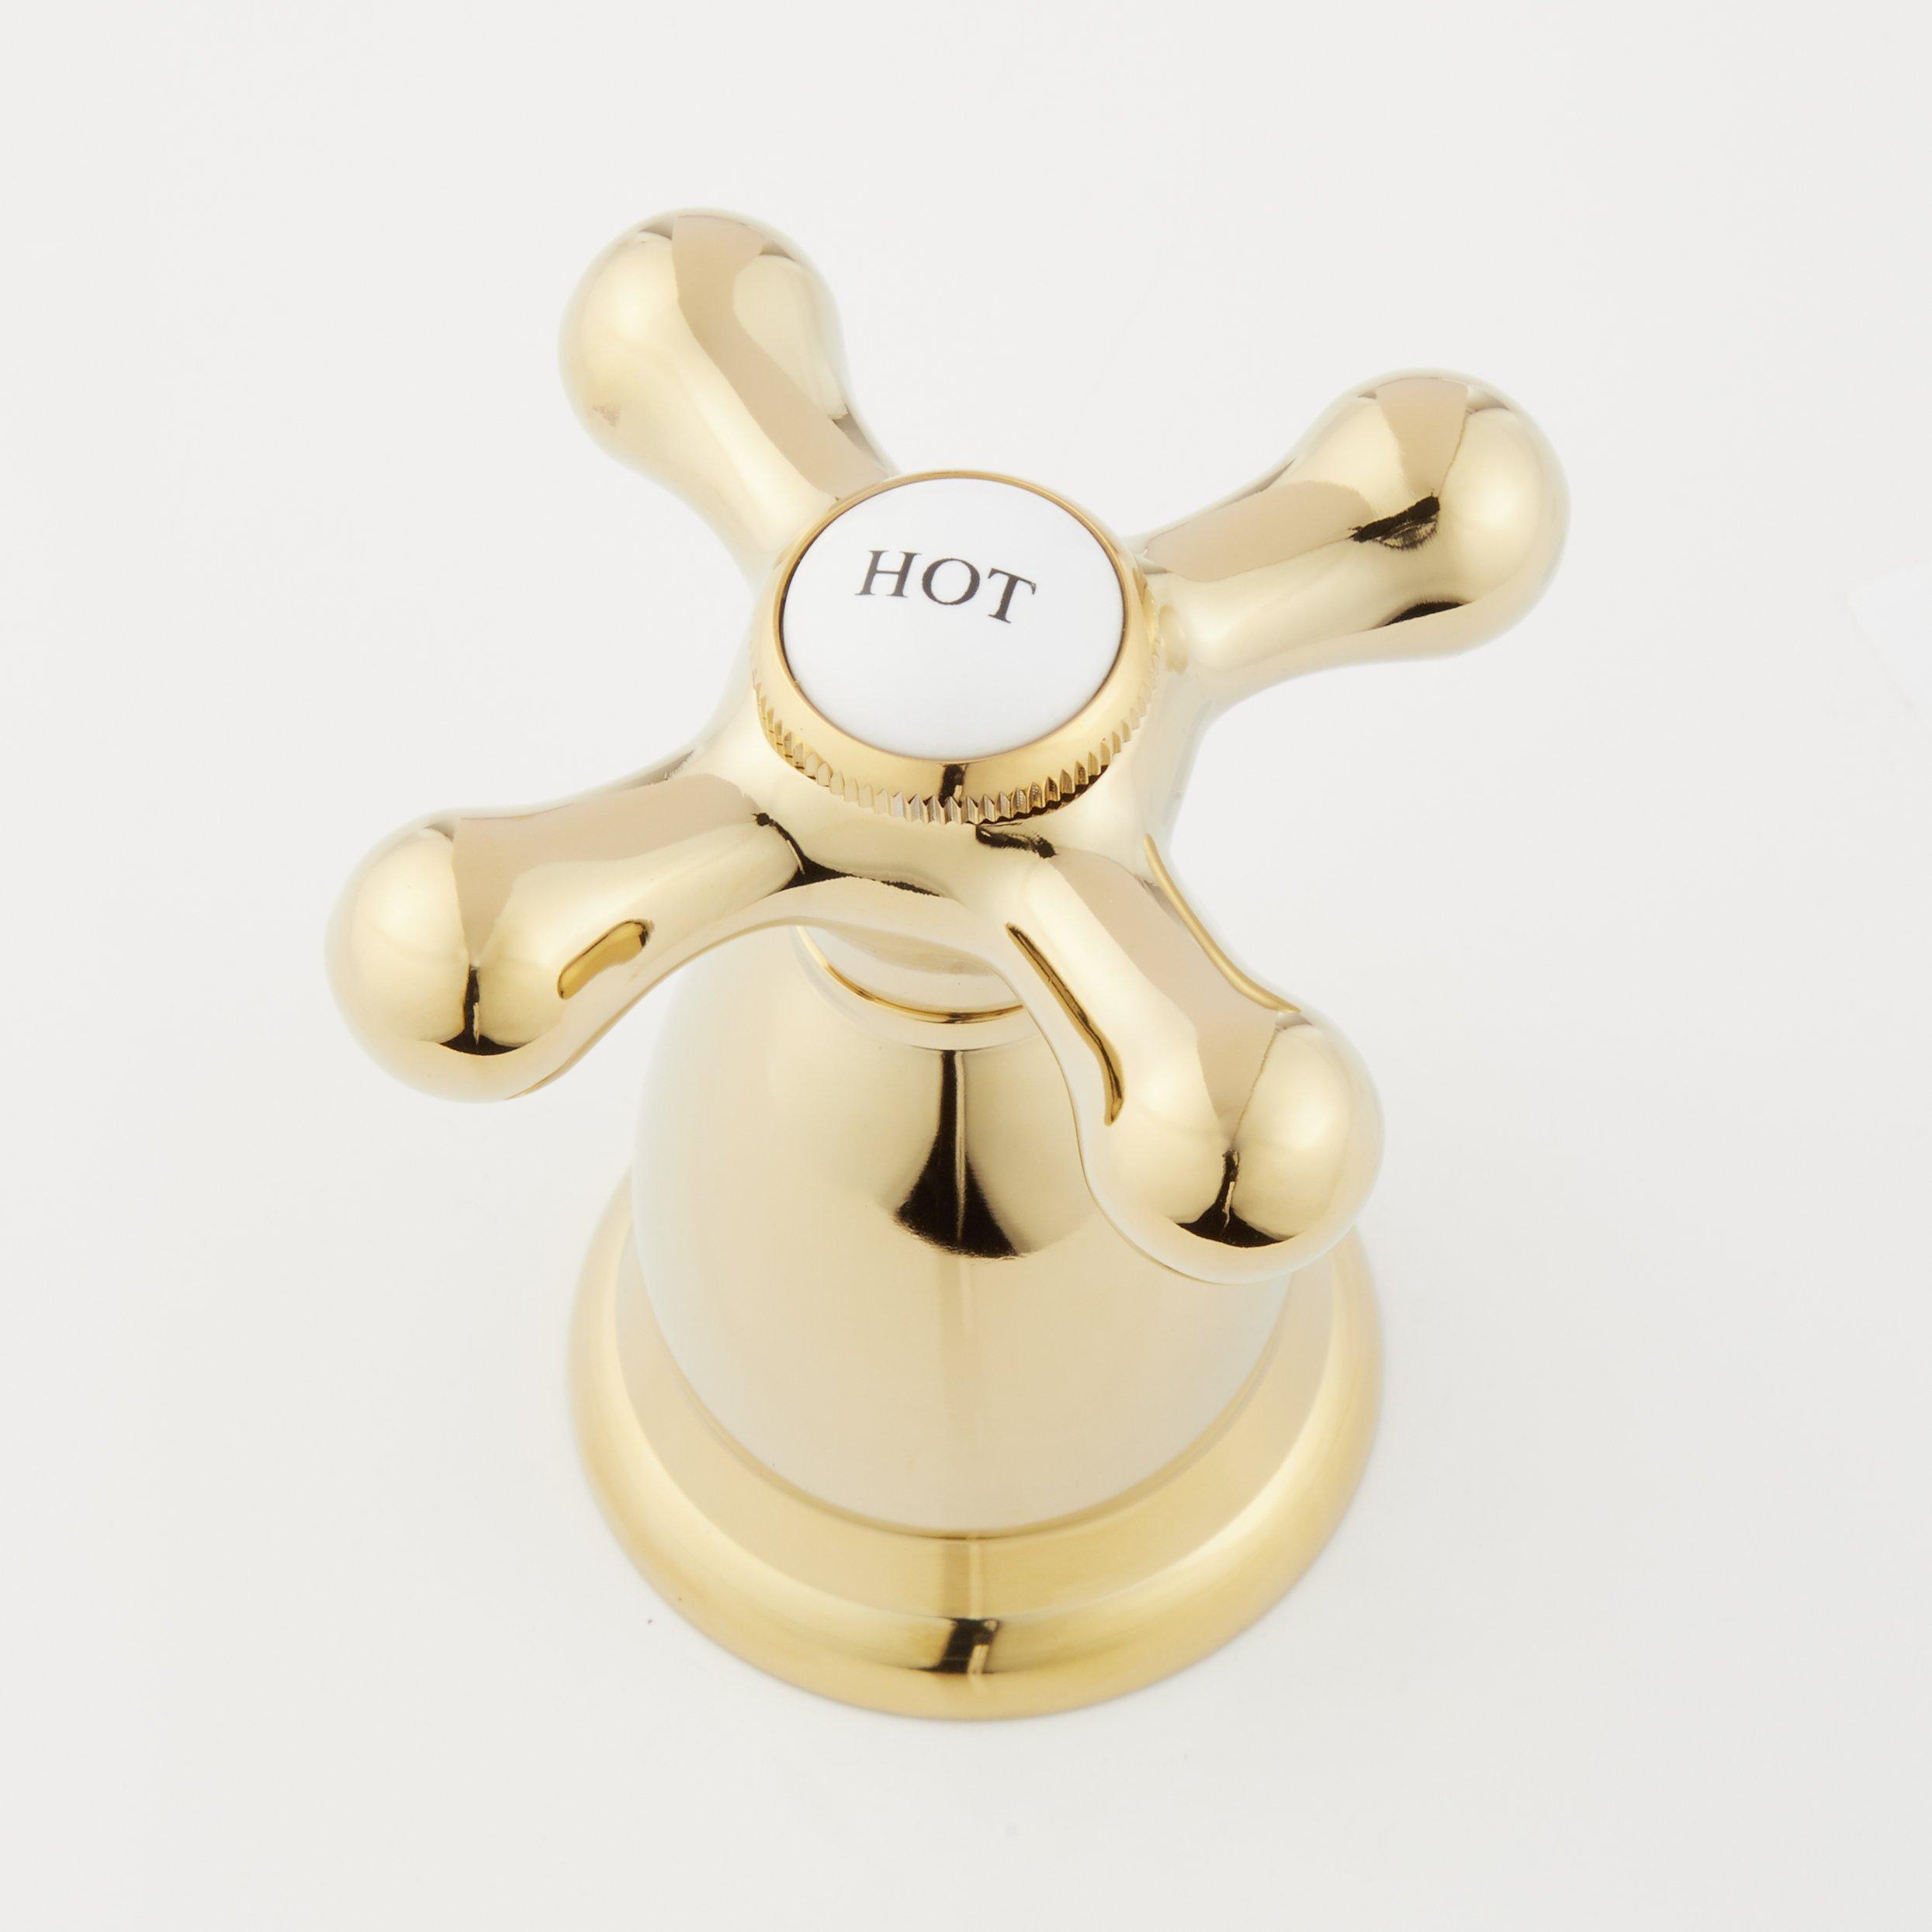 Victorian Widespread Bathroom Faucet Cross Handles Signature Hardware